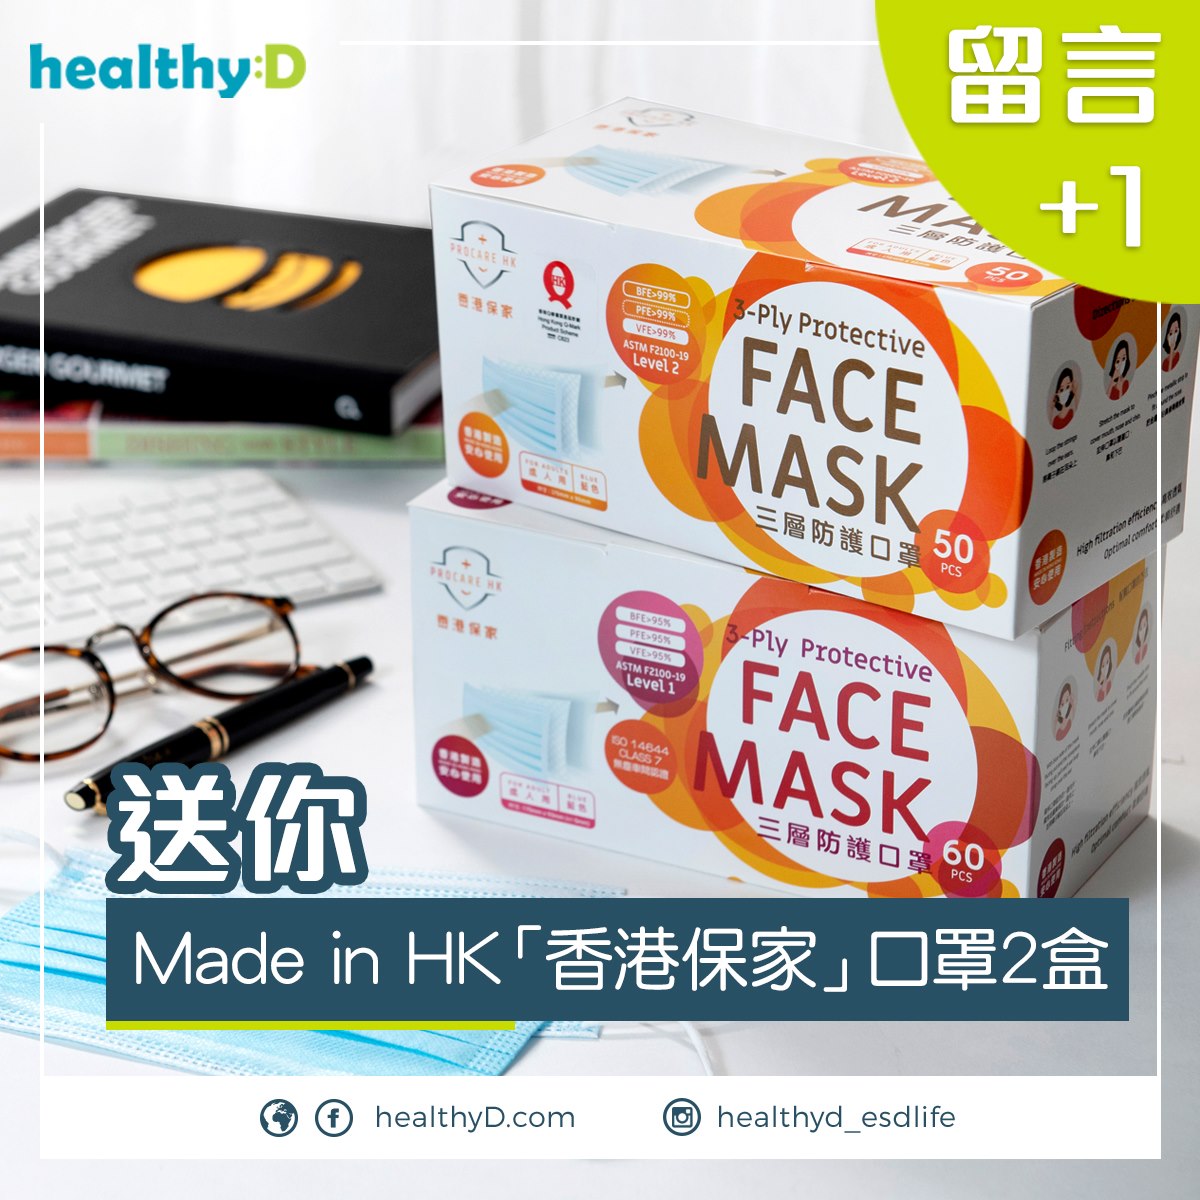 healthyD.com 有獎遊戲送 PROCARE HK「香港保家」口罩